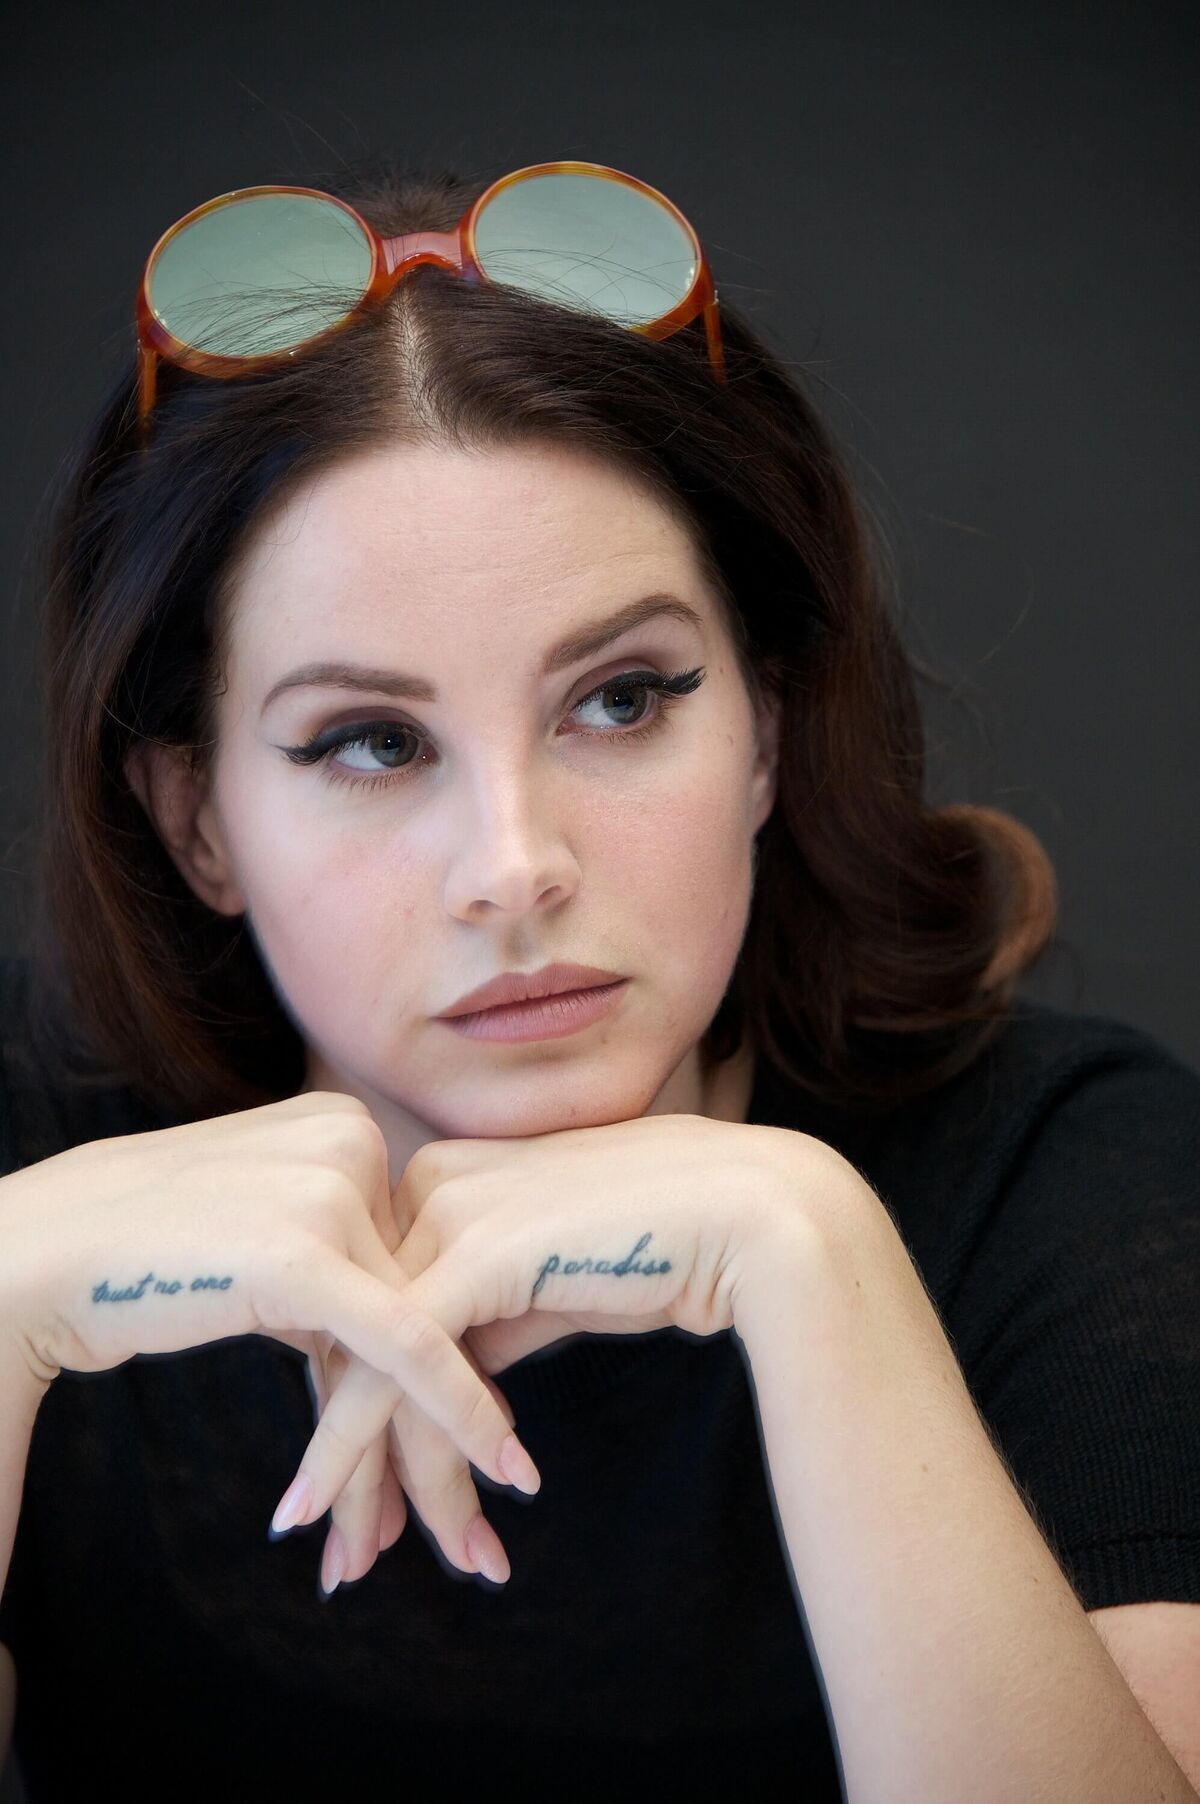 Sketch work Lana Del Rey portrait tattoo on the inner